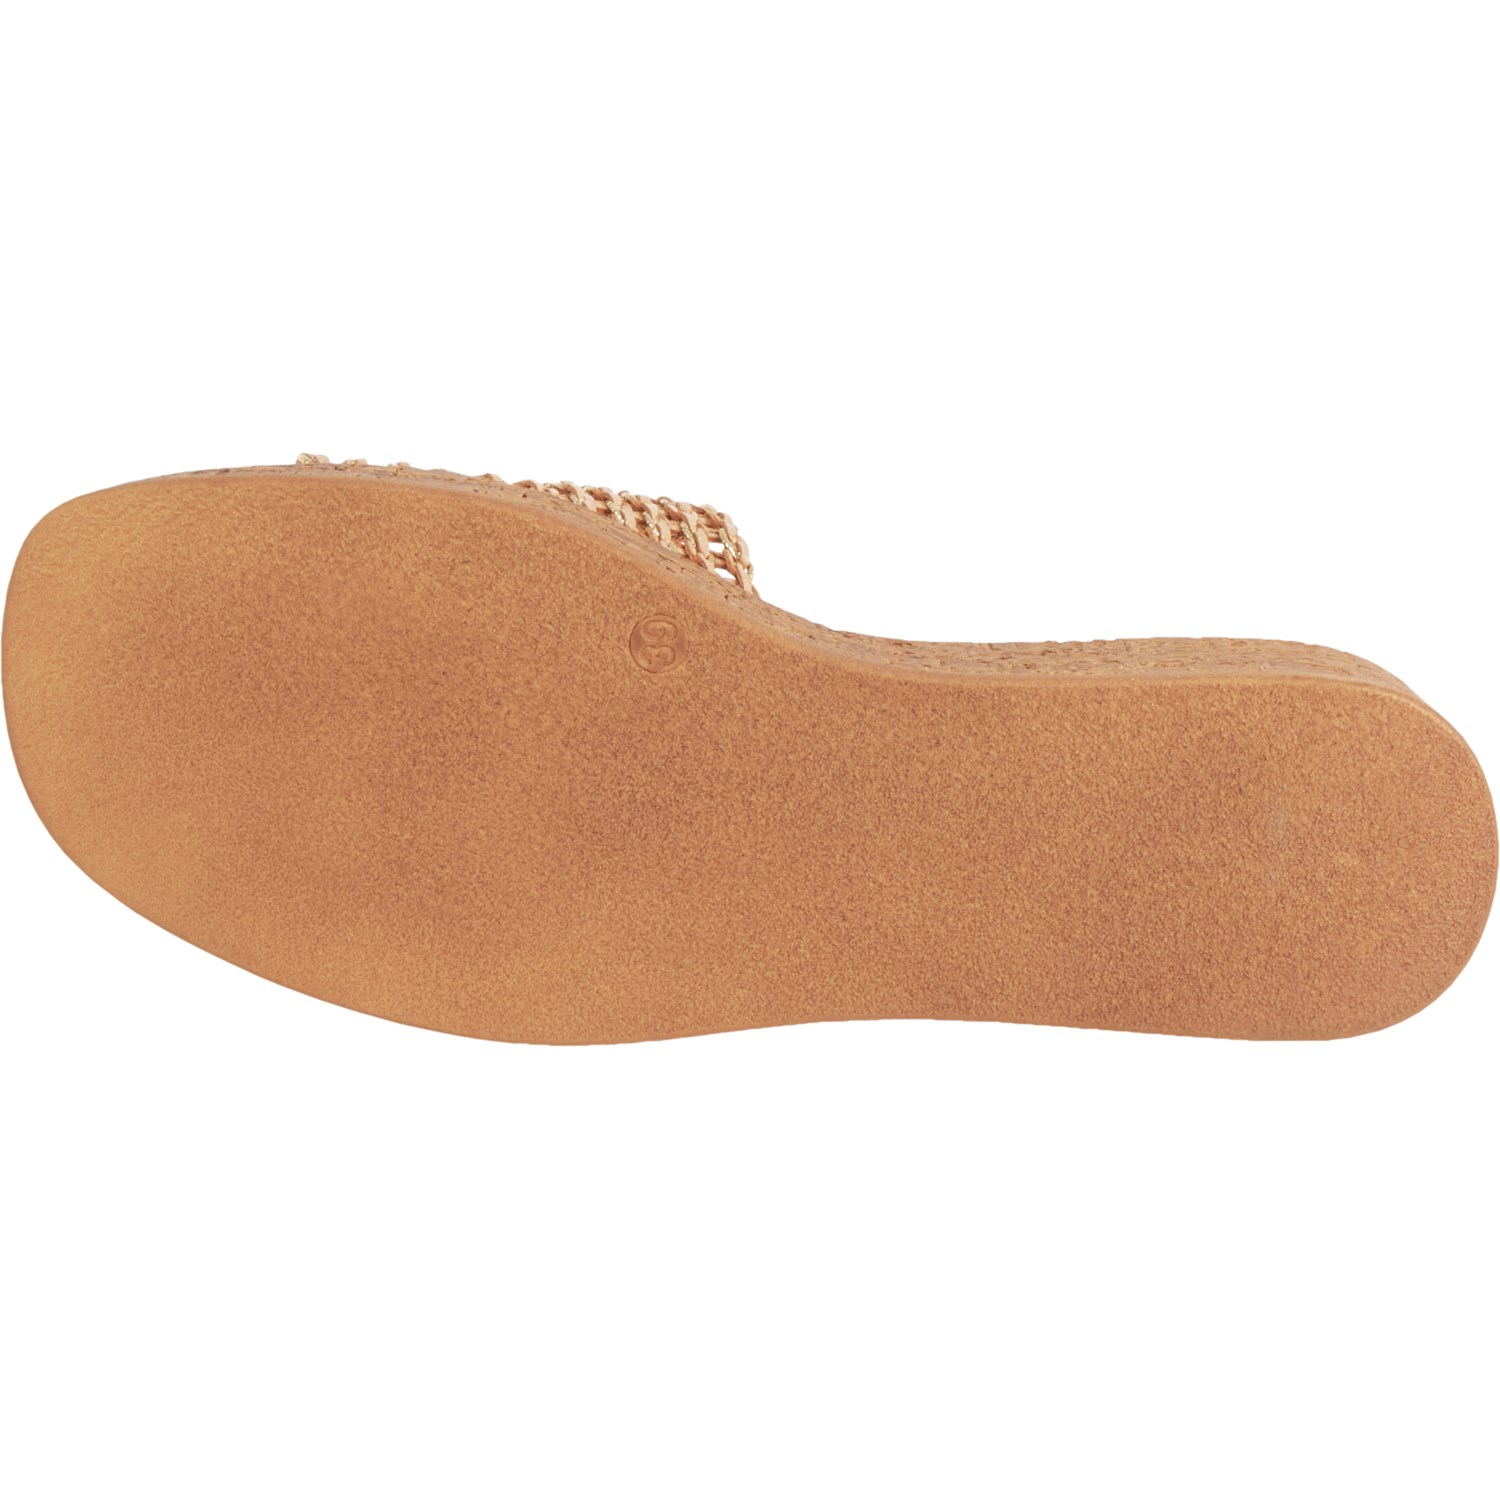 Mariella Made in Italy Raffia Platform Wedge Sandals (For Women) - Save 66%